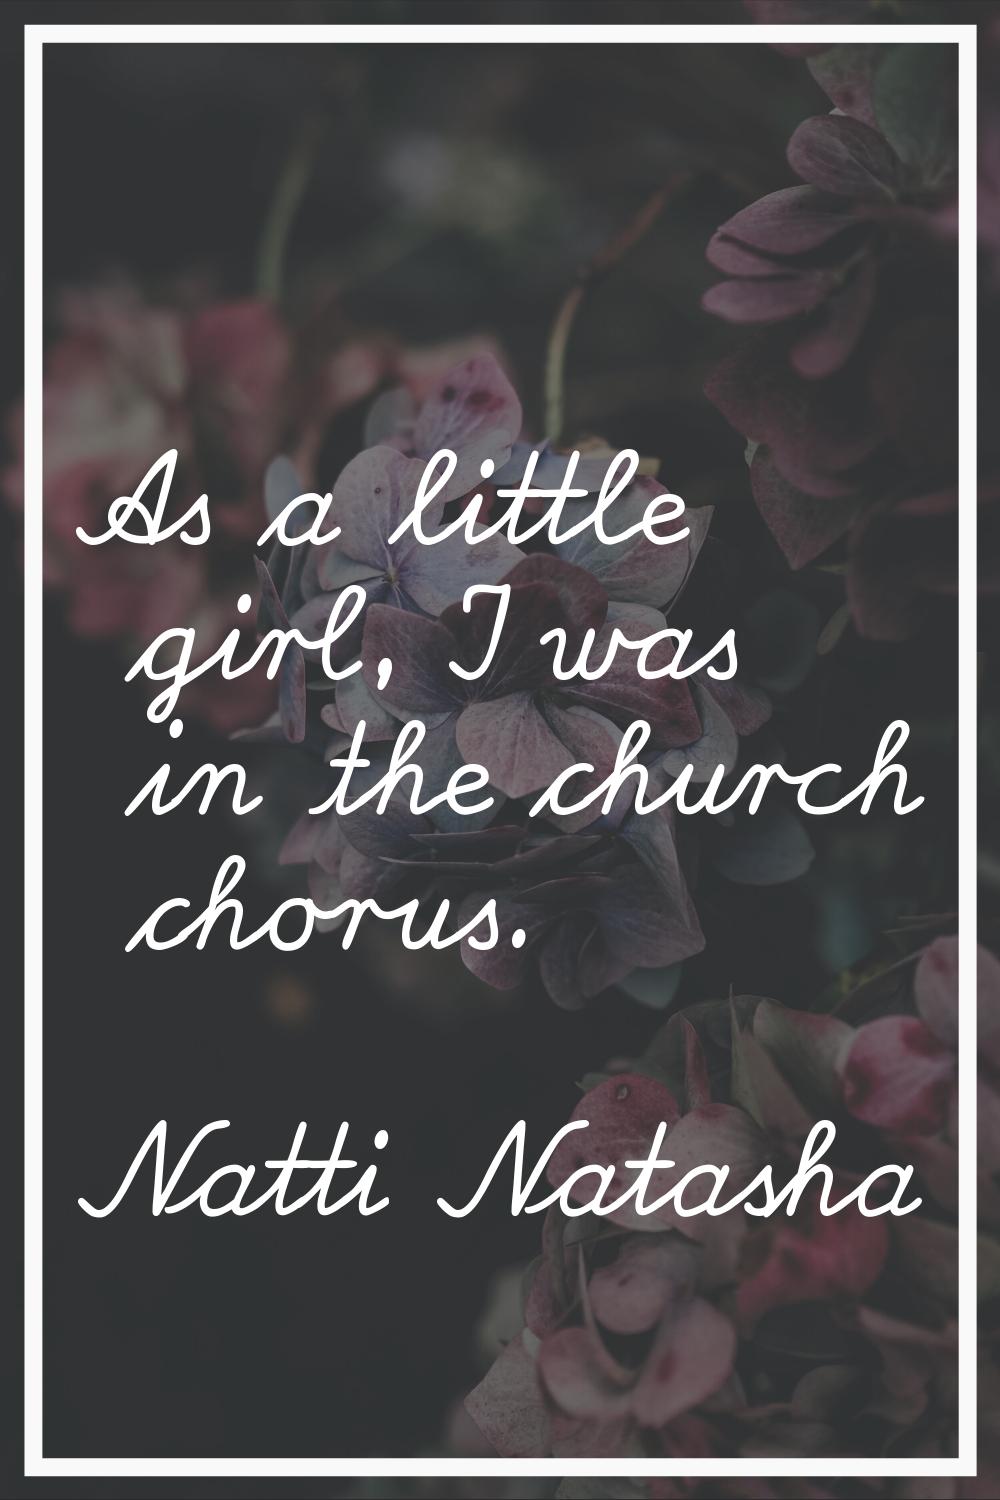 As a little girl, I was in the church chorus.